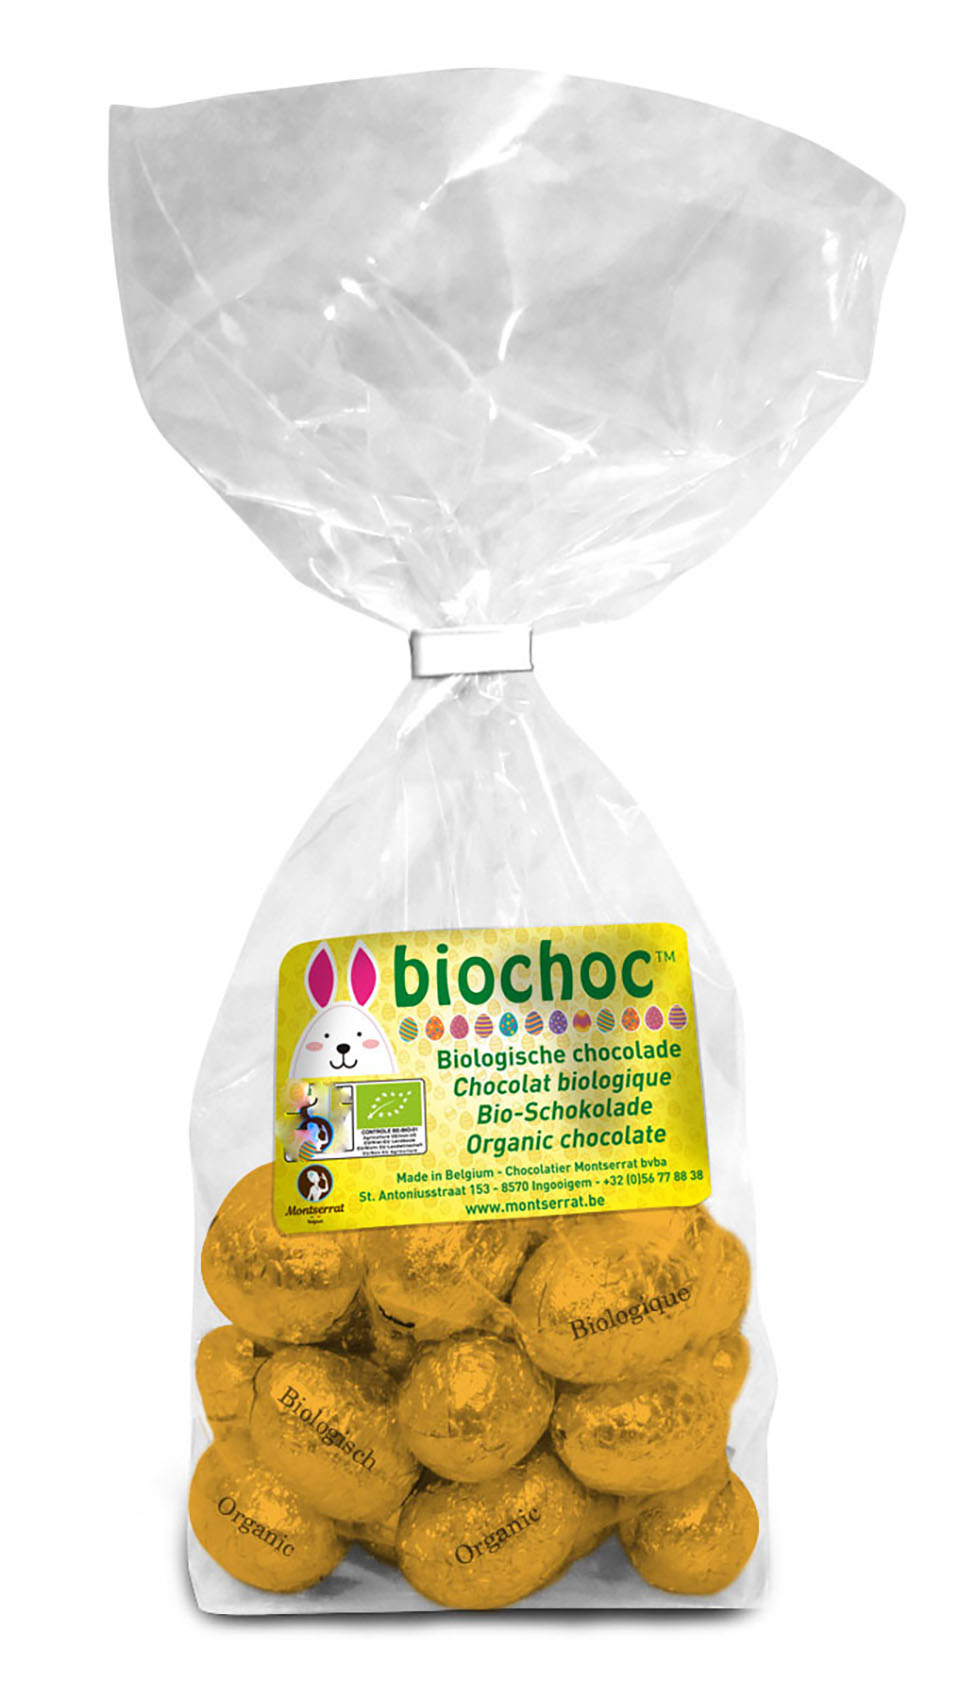 Biochoc Paaseitjes wit/praliné rietsuiker bio 150g